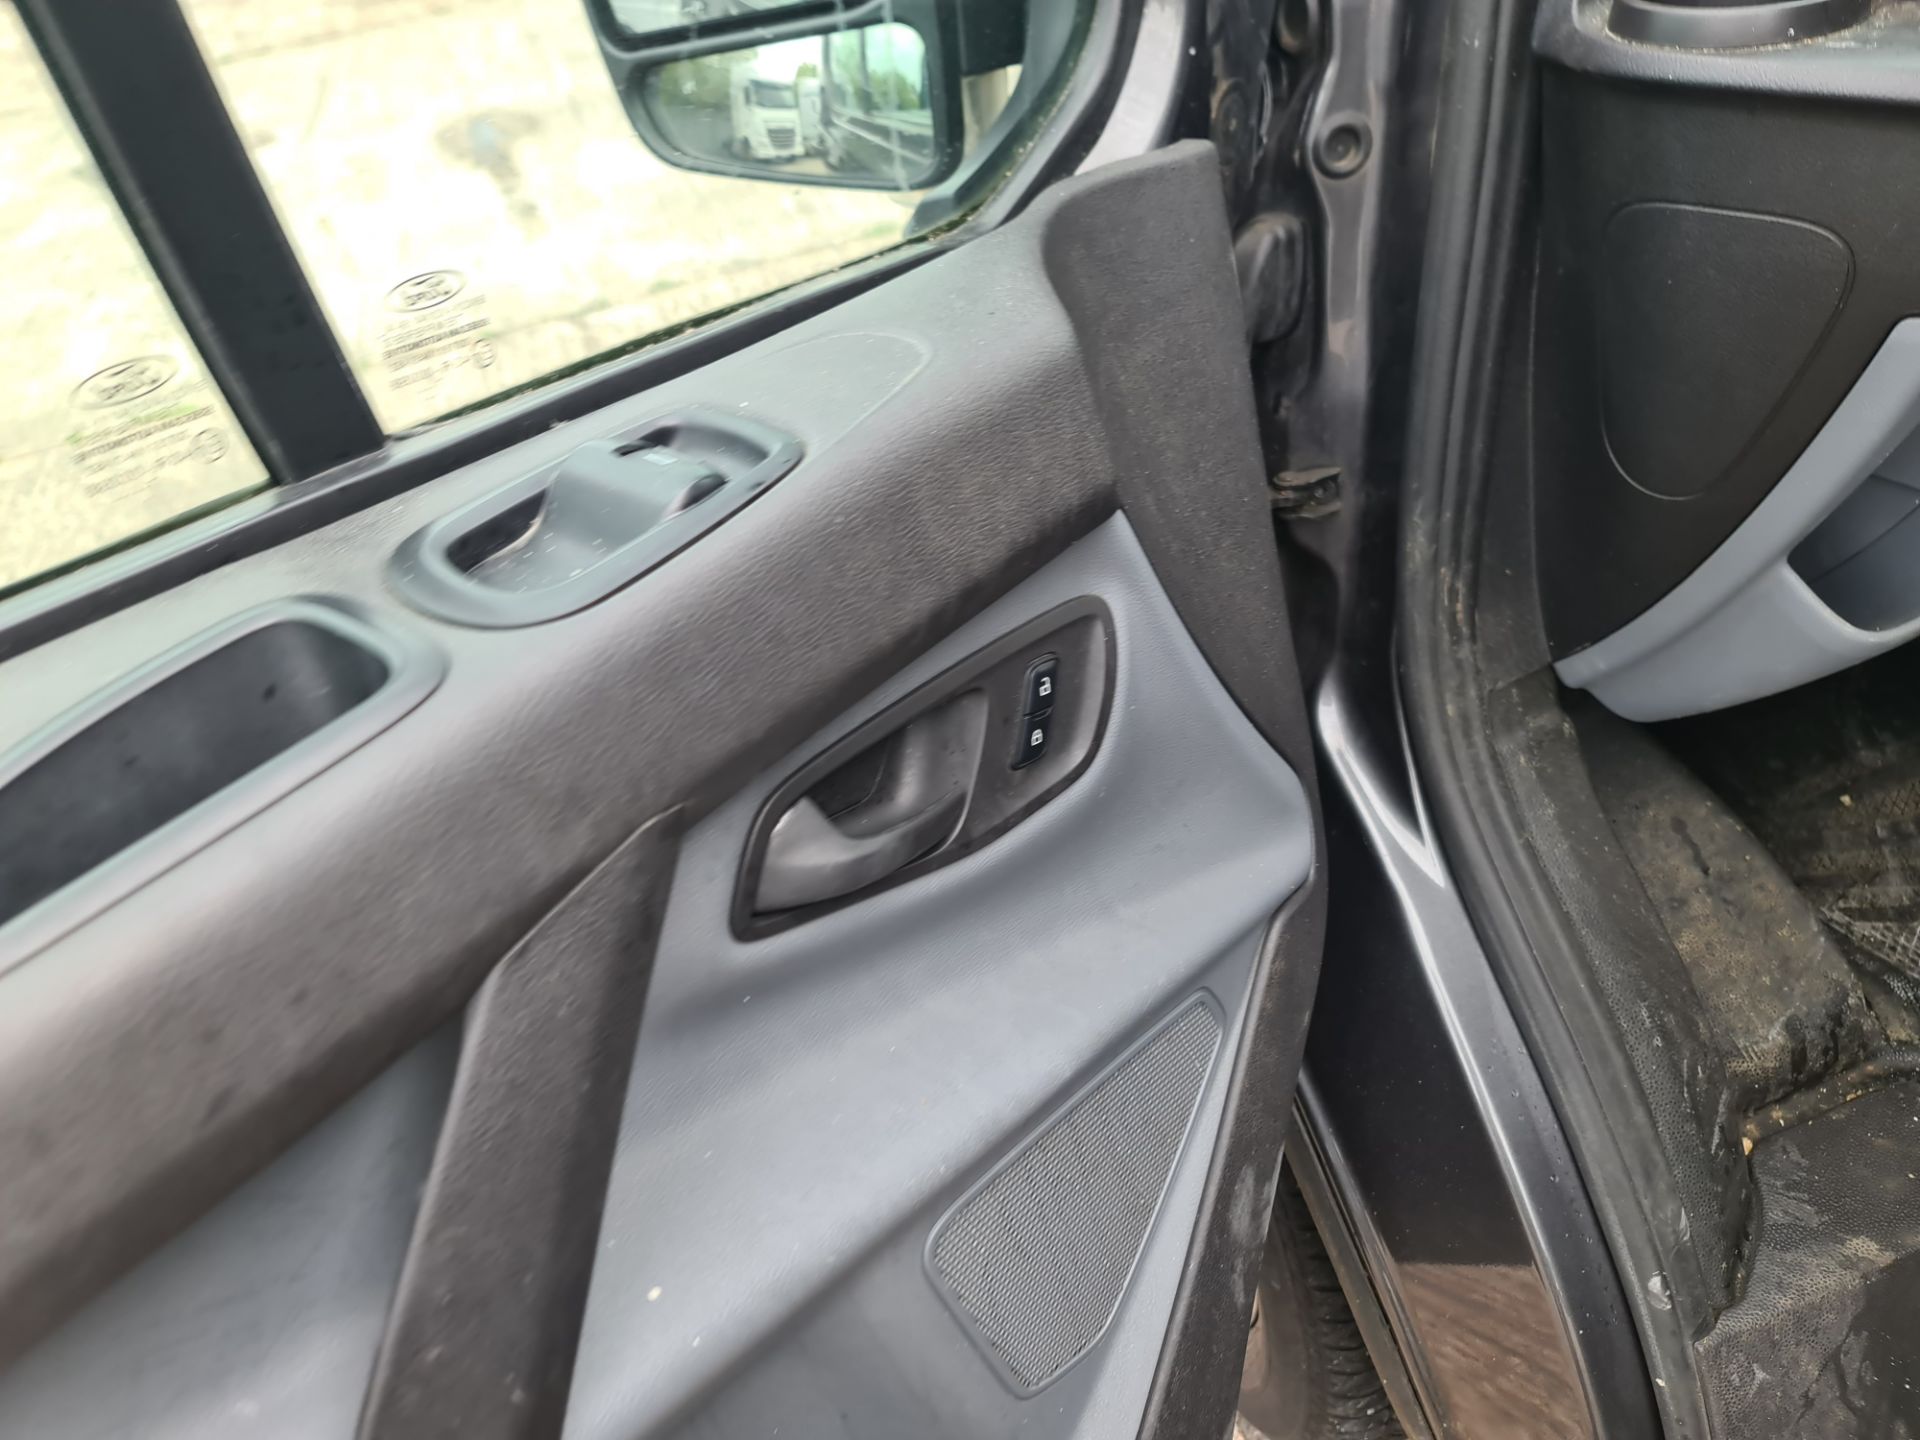 2018 Ford Transit Custom 270 panel van - Image 51 of 74